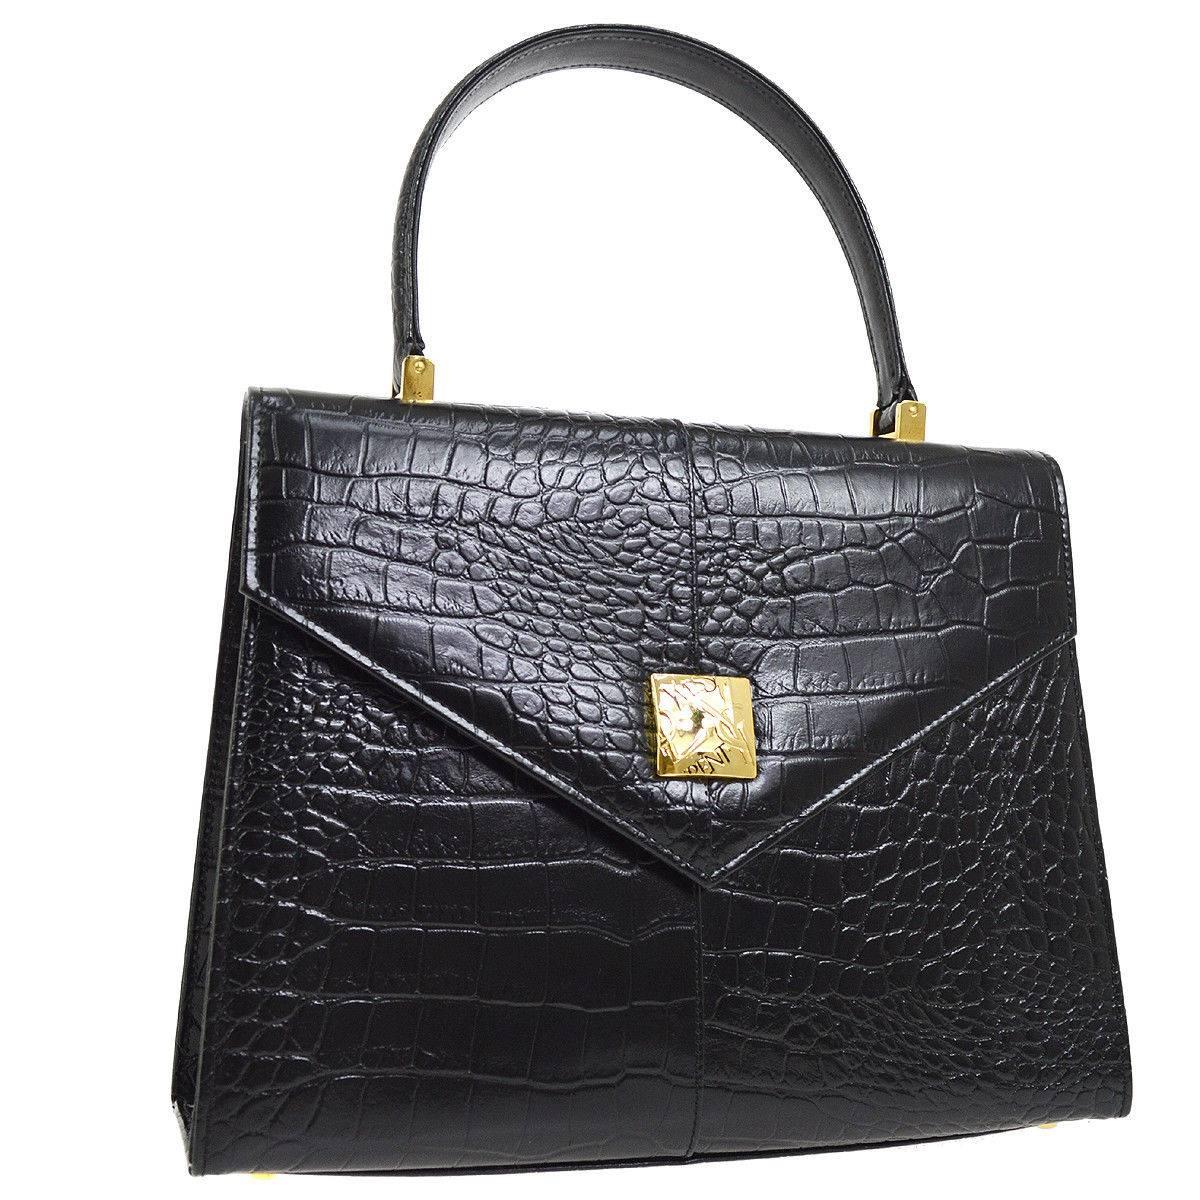 Yves Saint Laurent Black Leather Evening Kelly Style Top Handle Satchel Bag